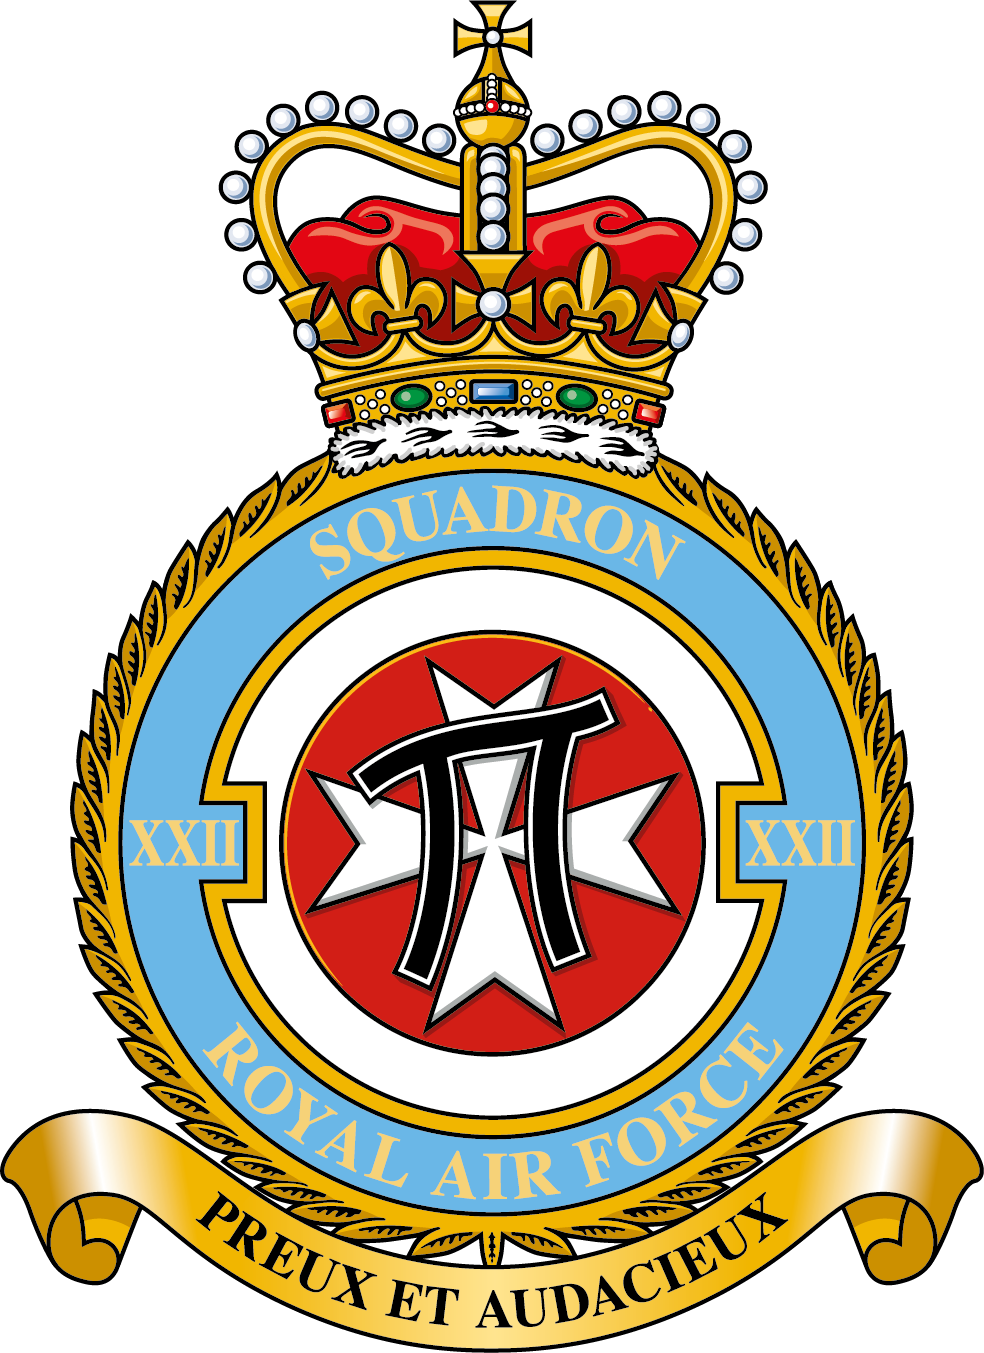 22 Squadron RAF